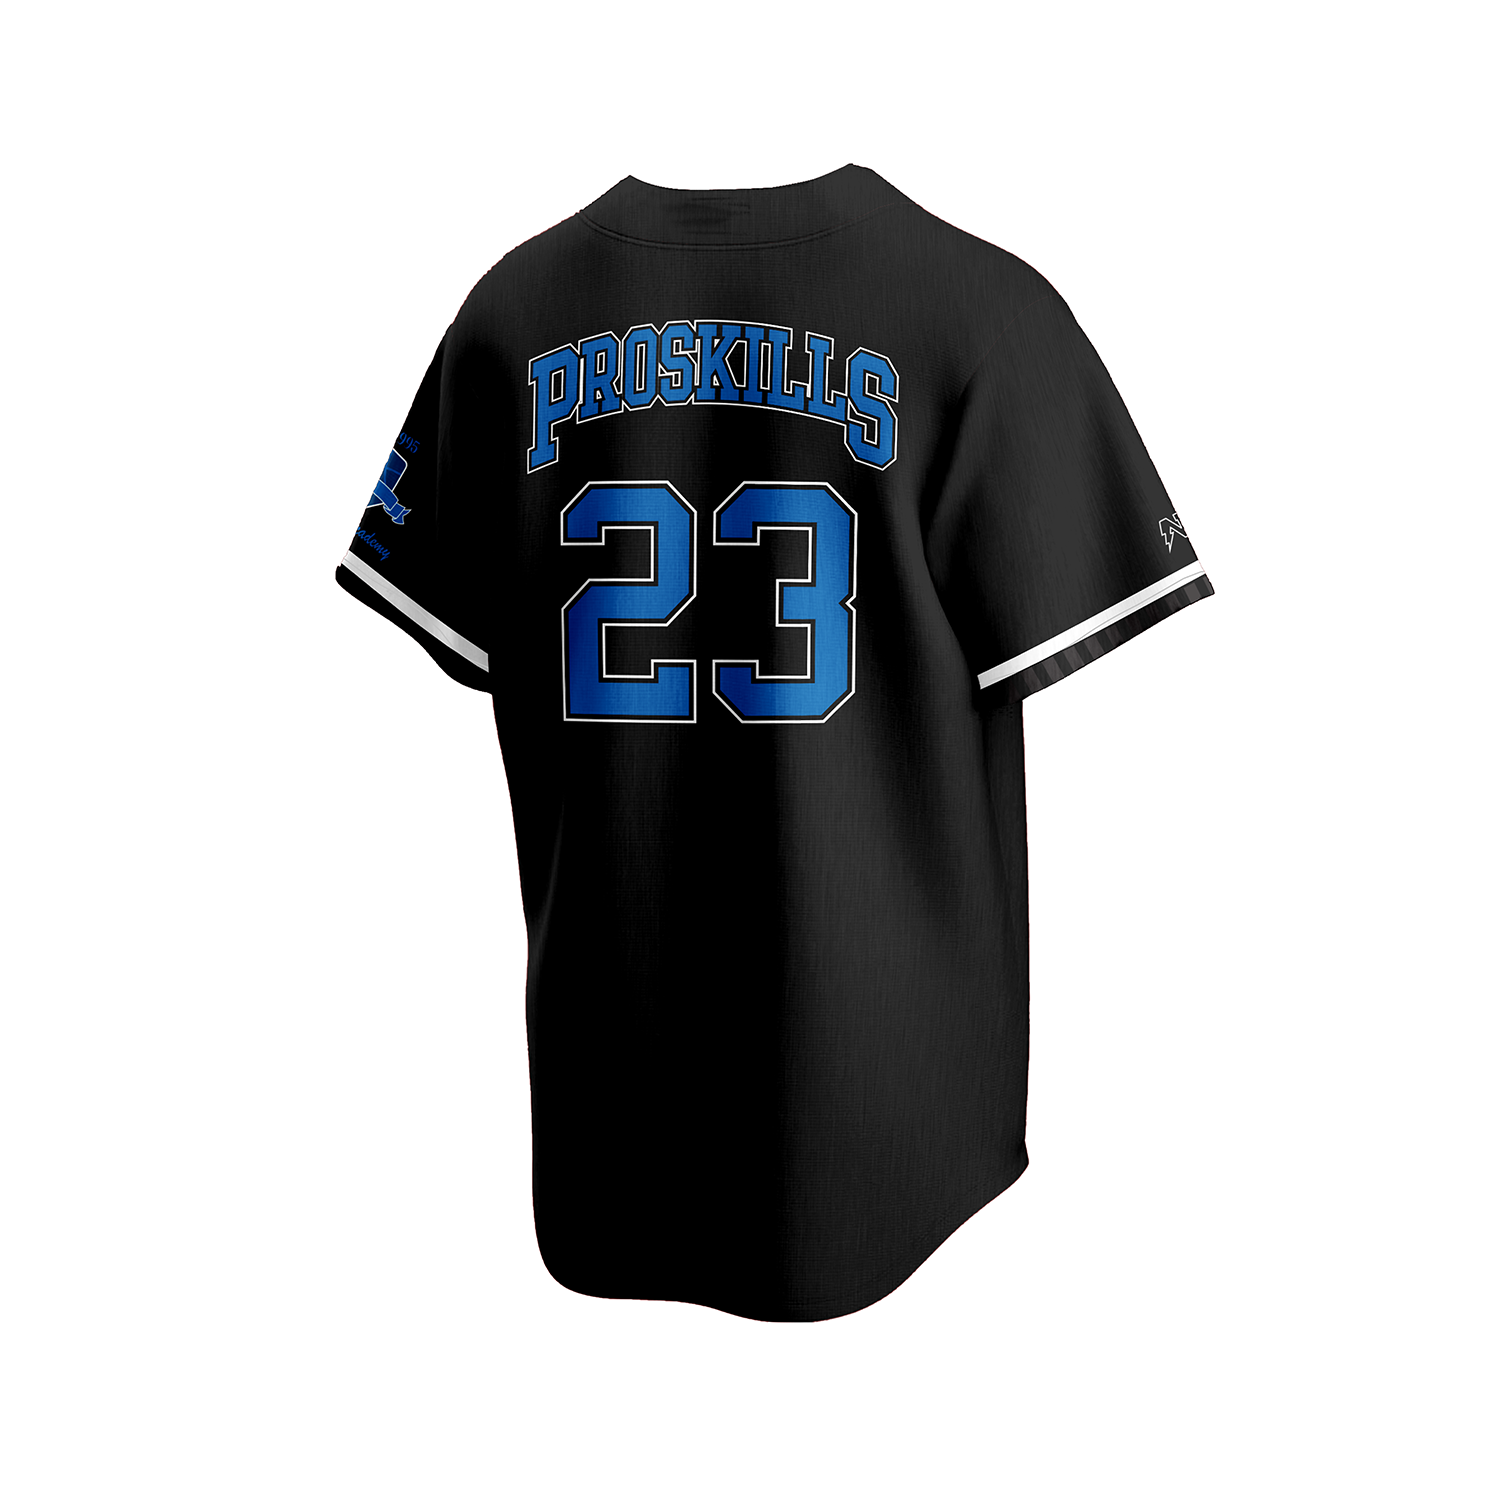 Customizable ProSkills Baseball Jersey -Black